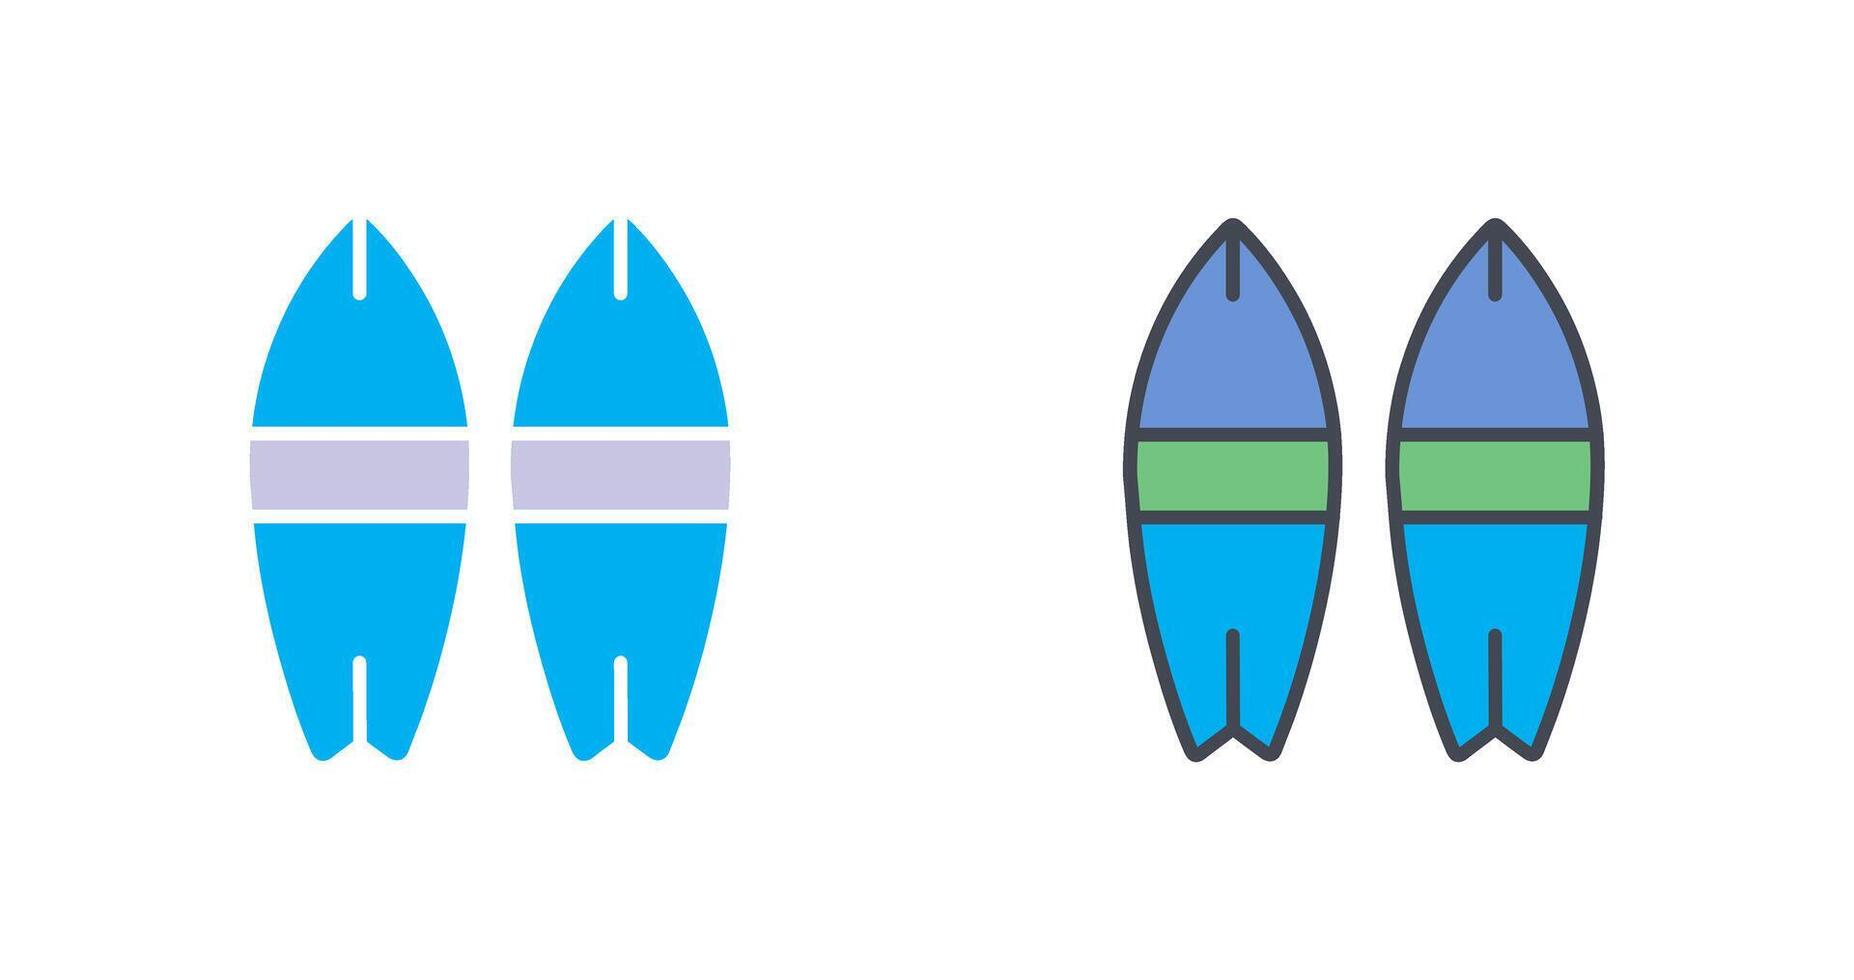 design de ícone de prancha de surf vetor